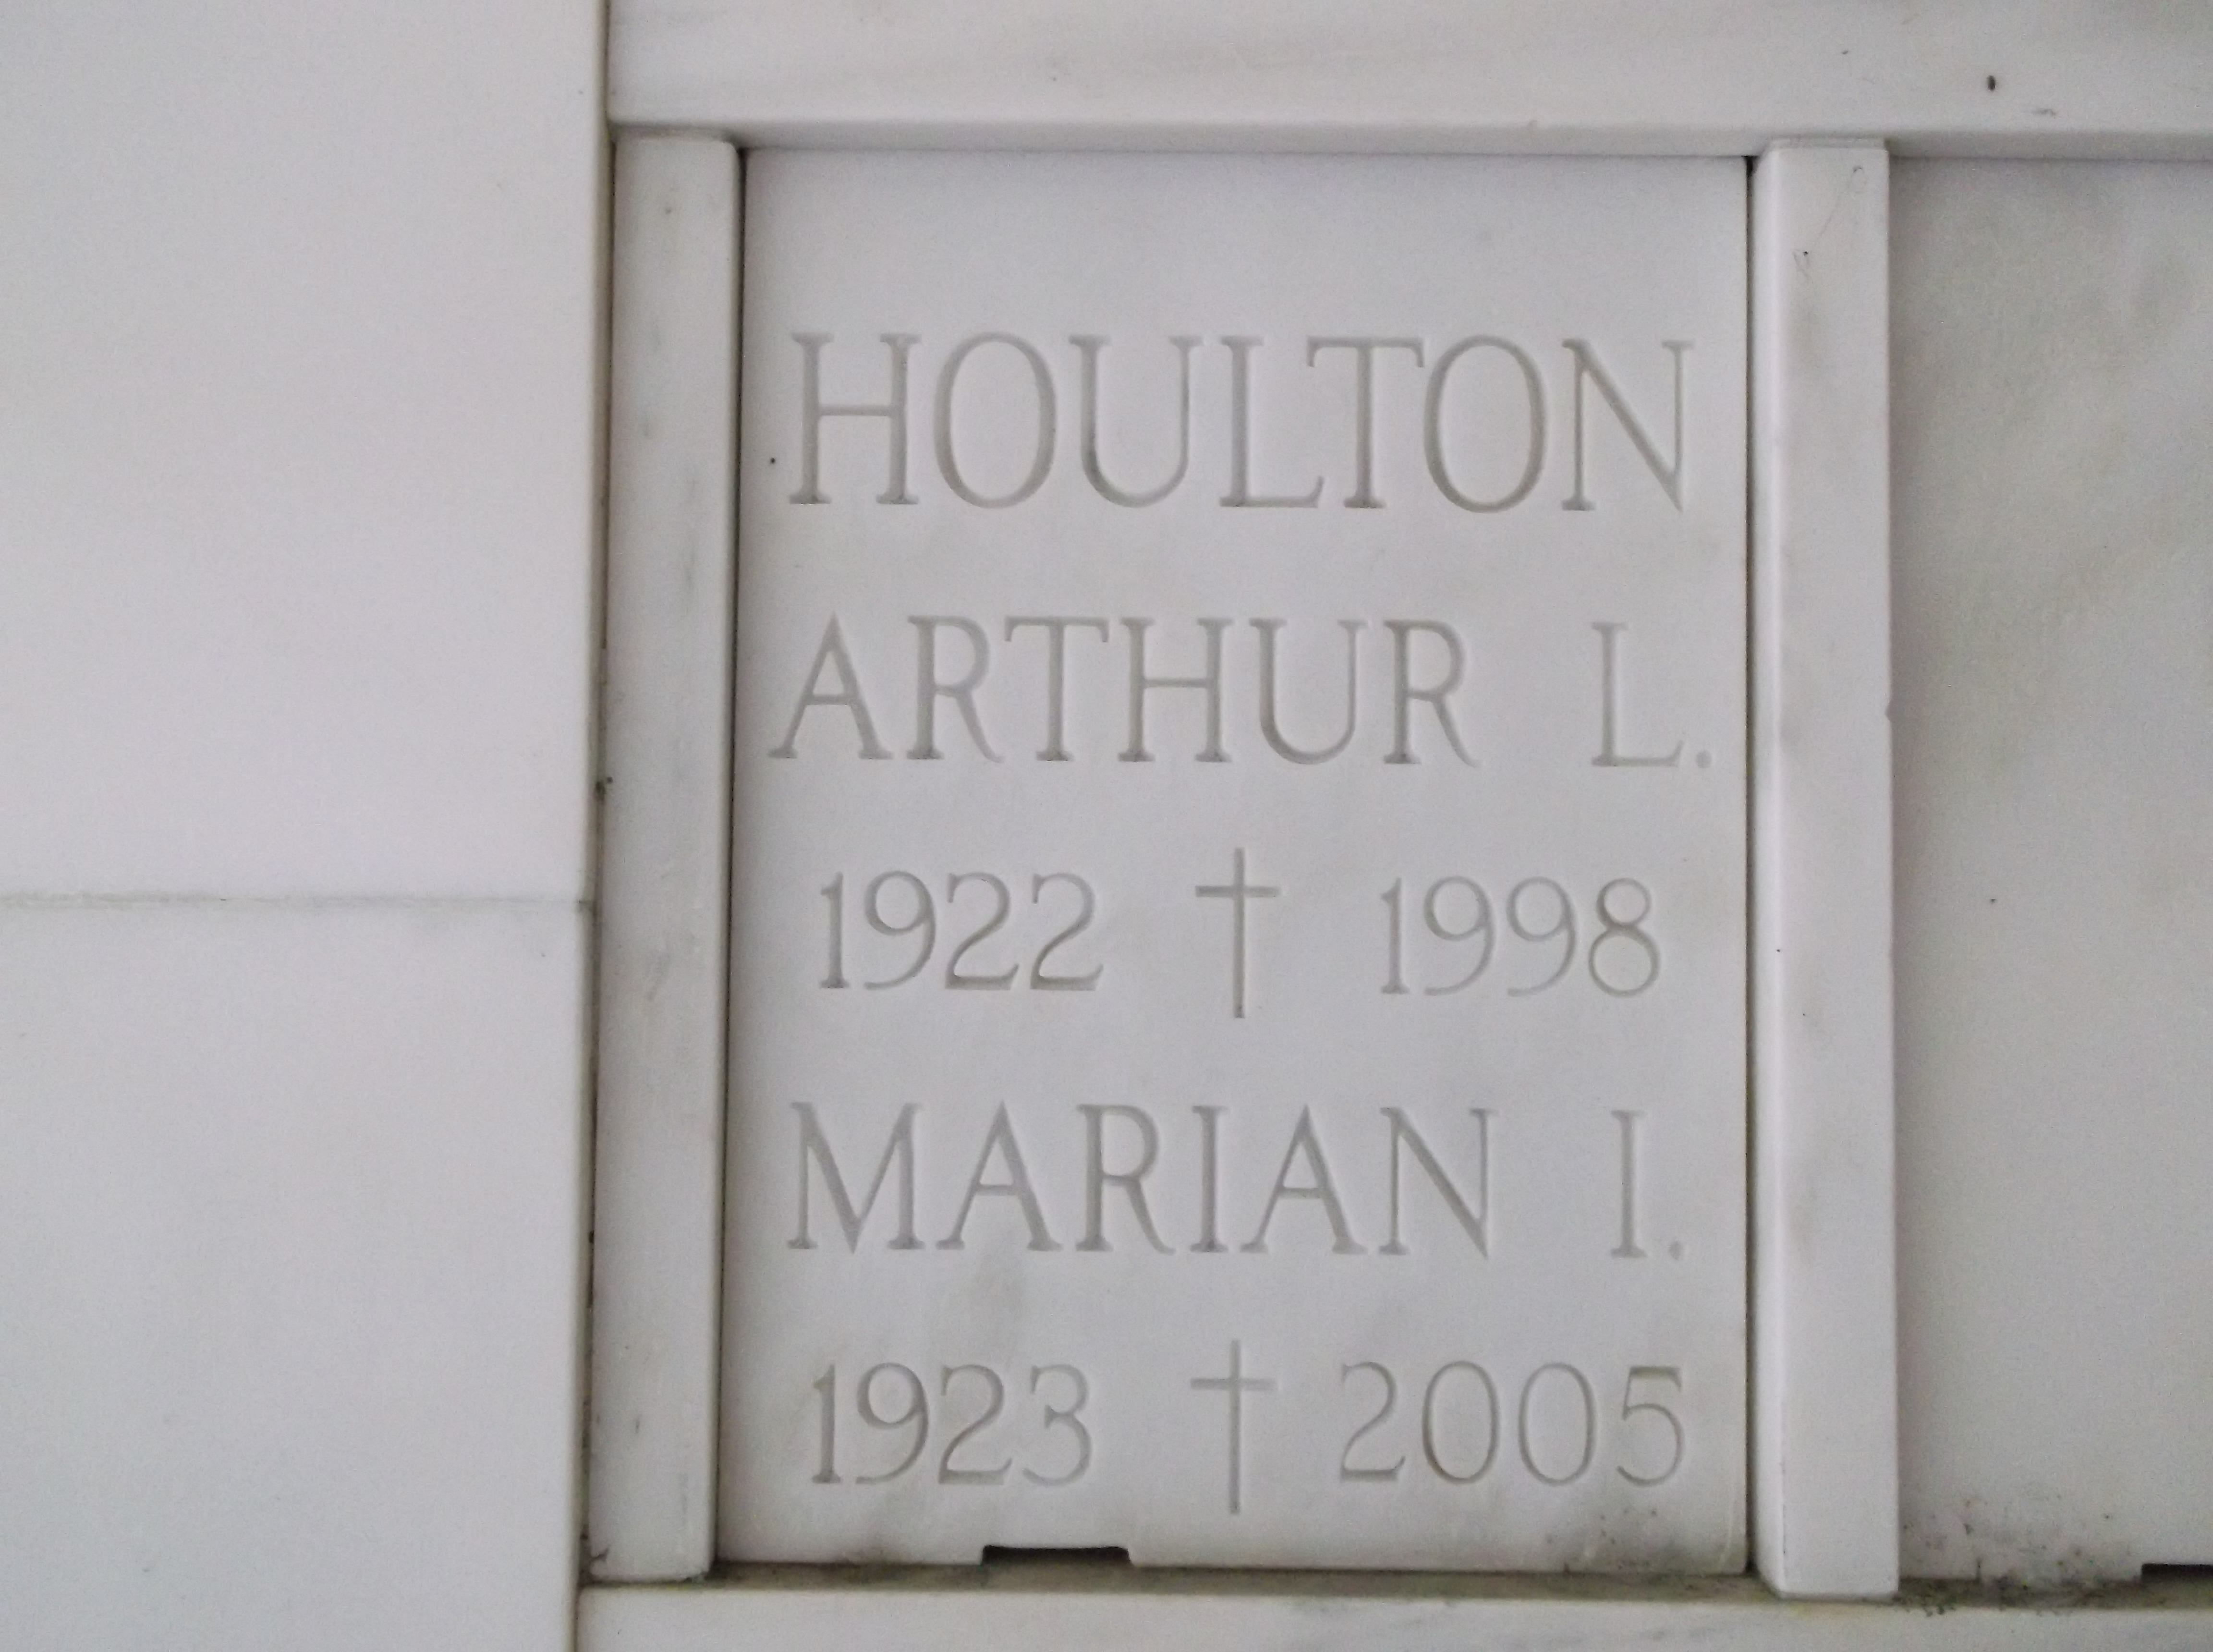 Arthur L Houlton